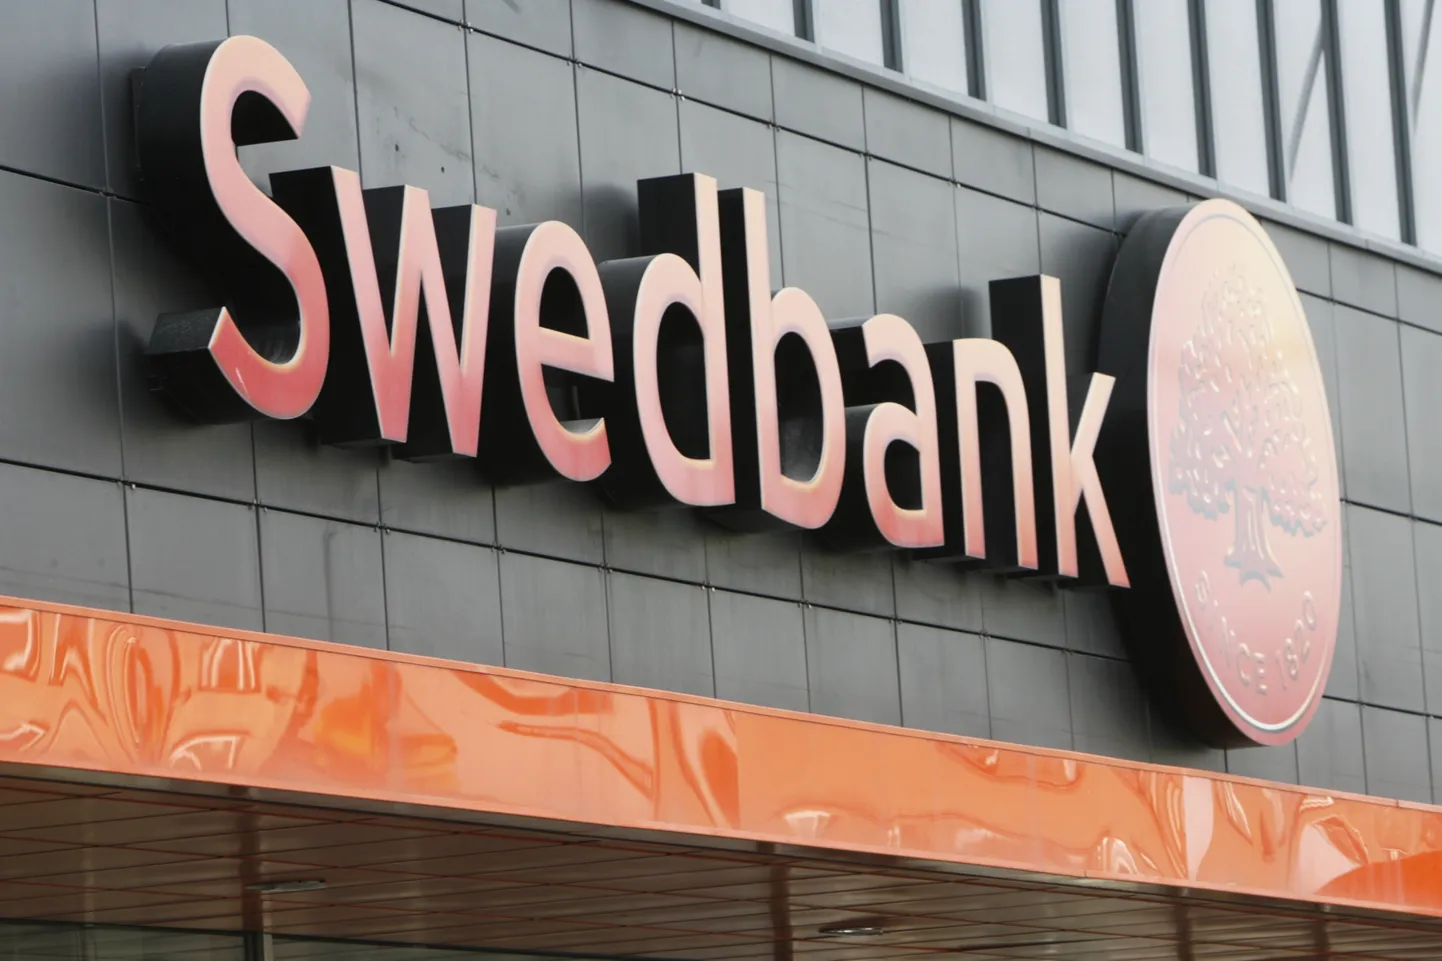 Логотип Swedbank. Иллюстративное фото.